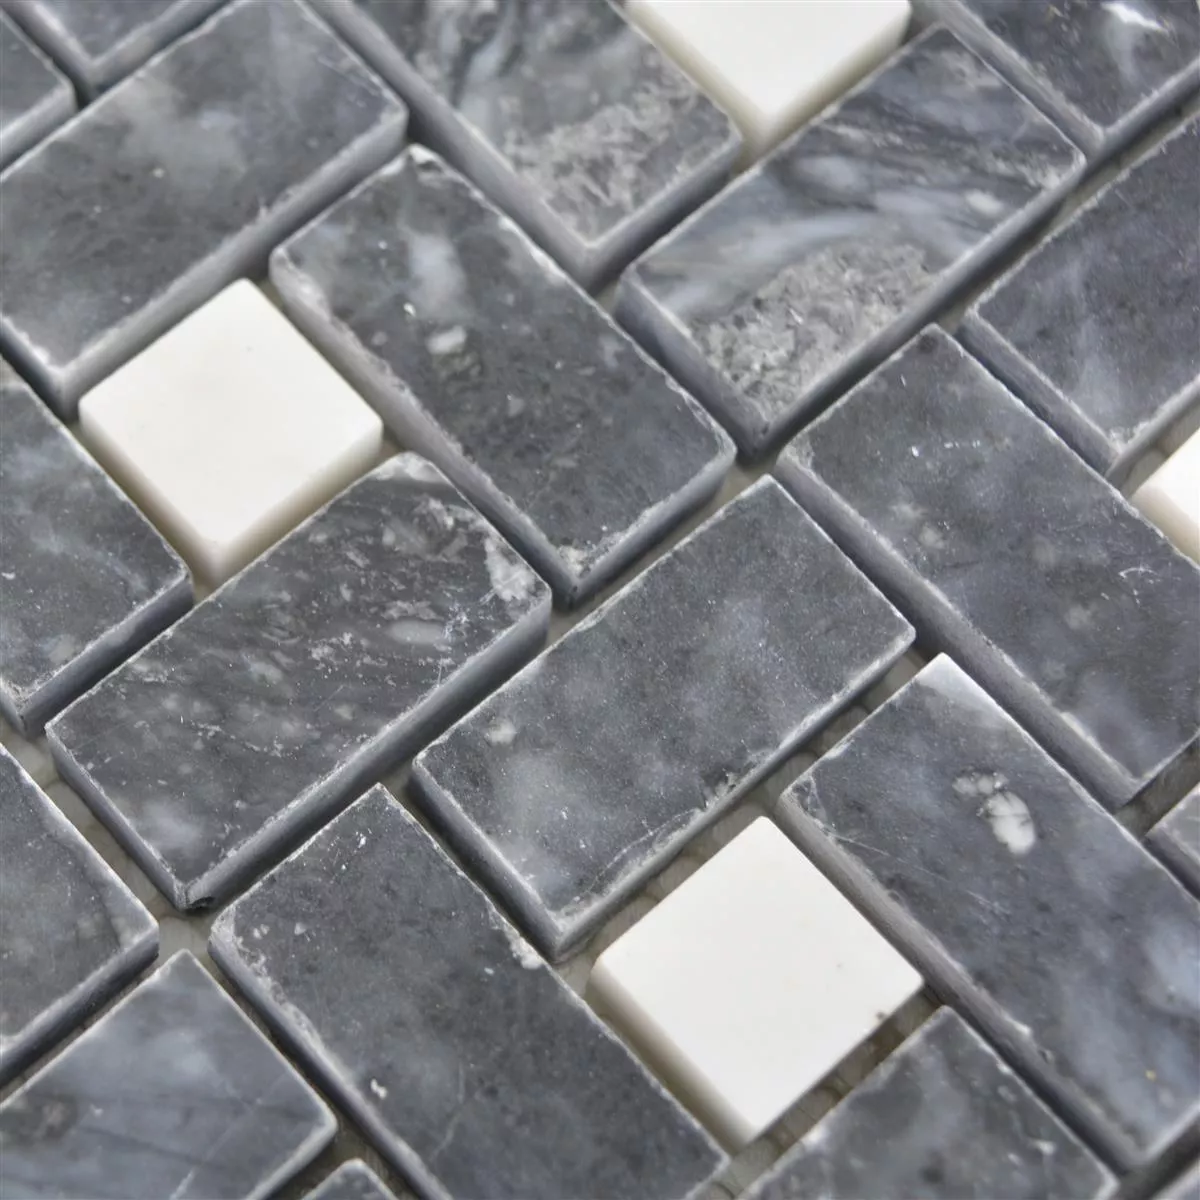 Sample Natural Stone Marble Mosaic Tiles Umay Black White